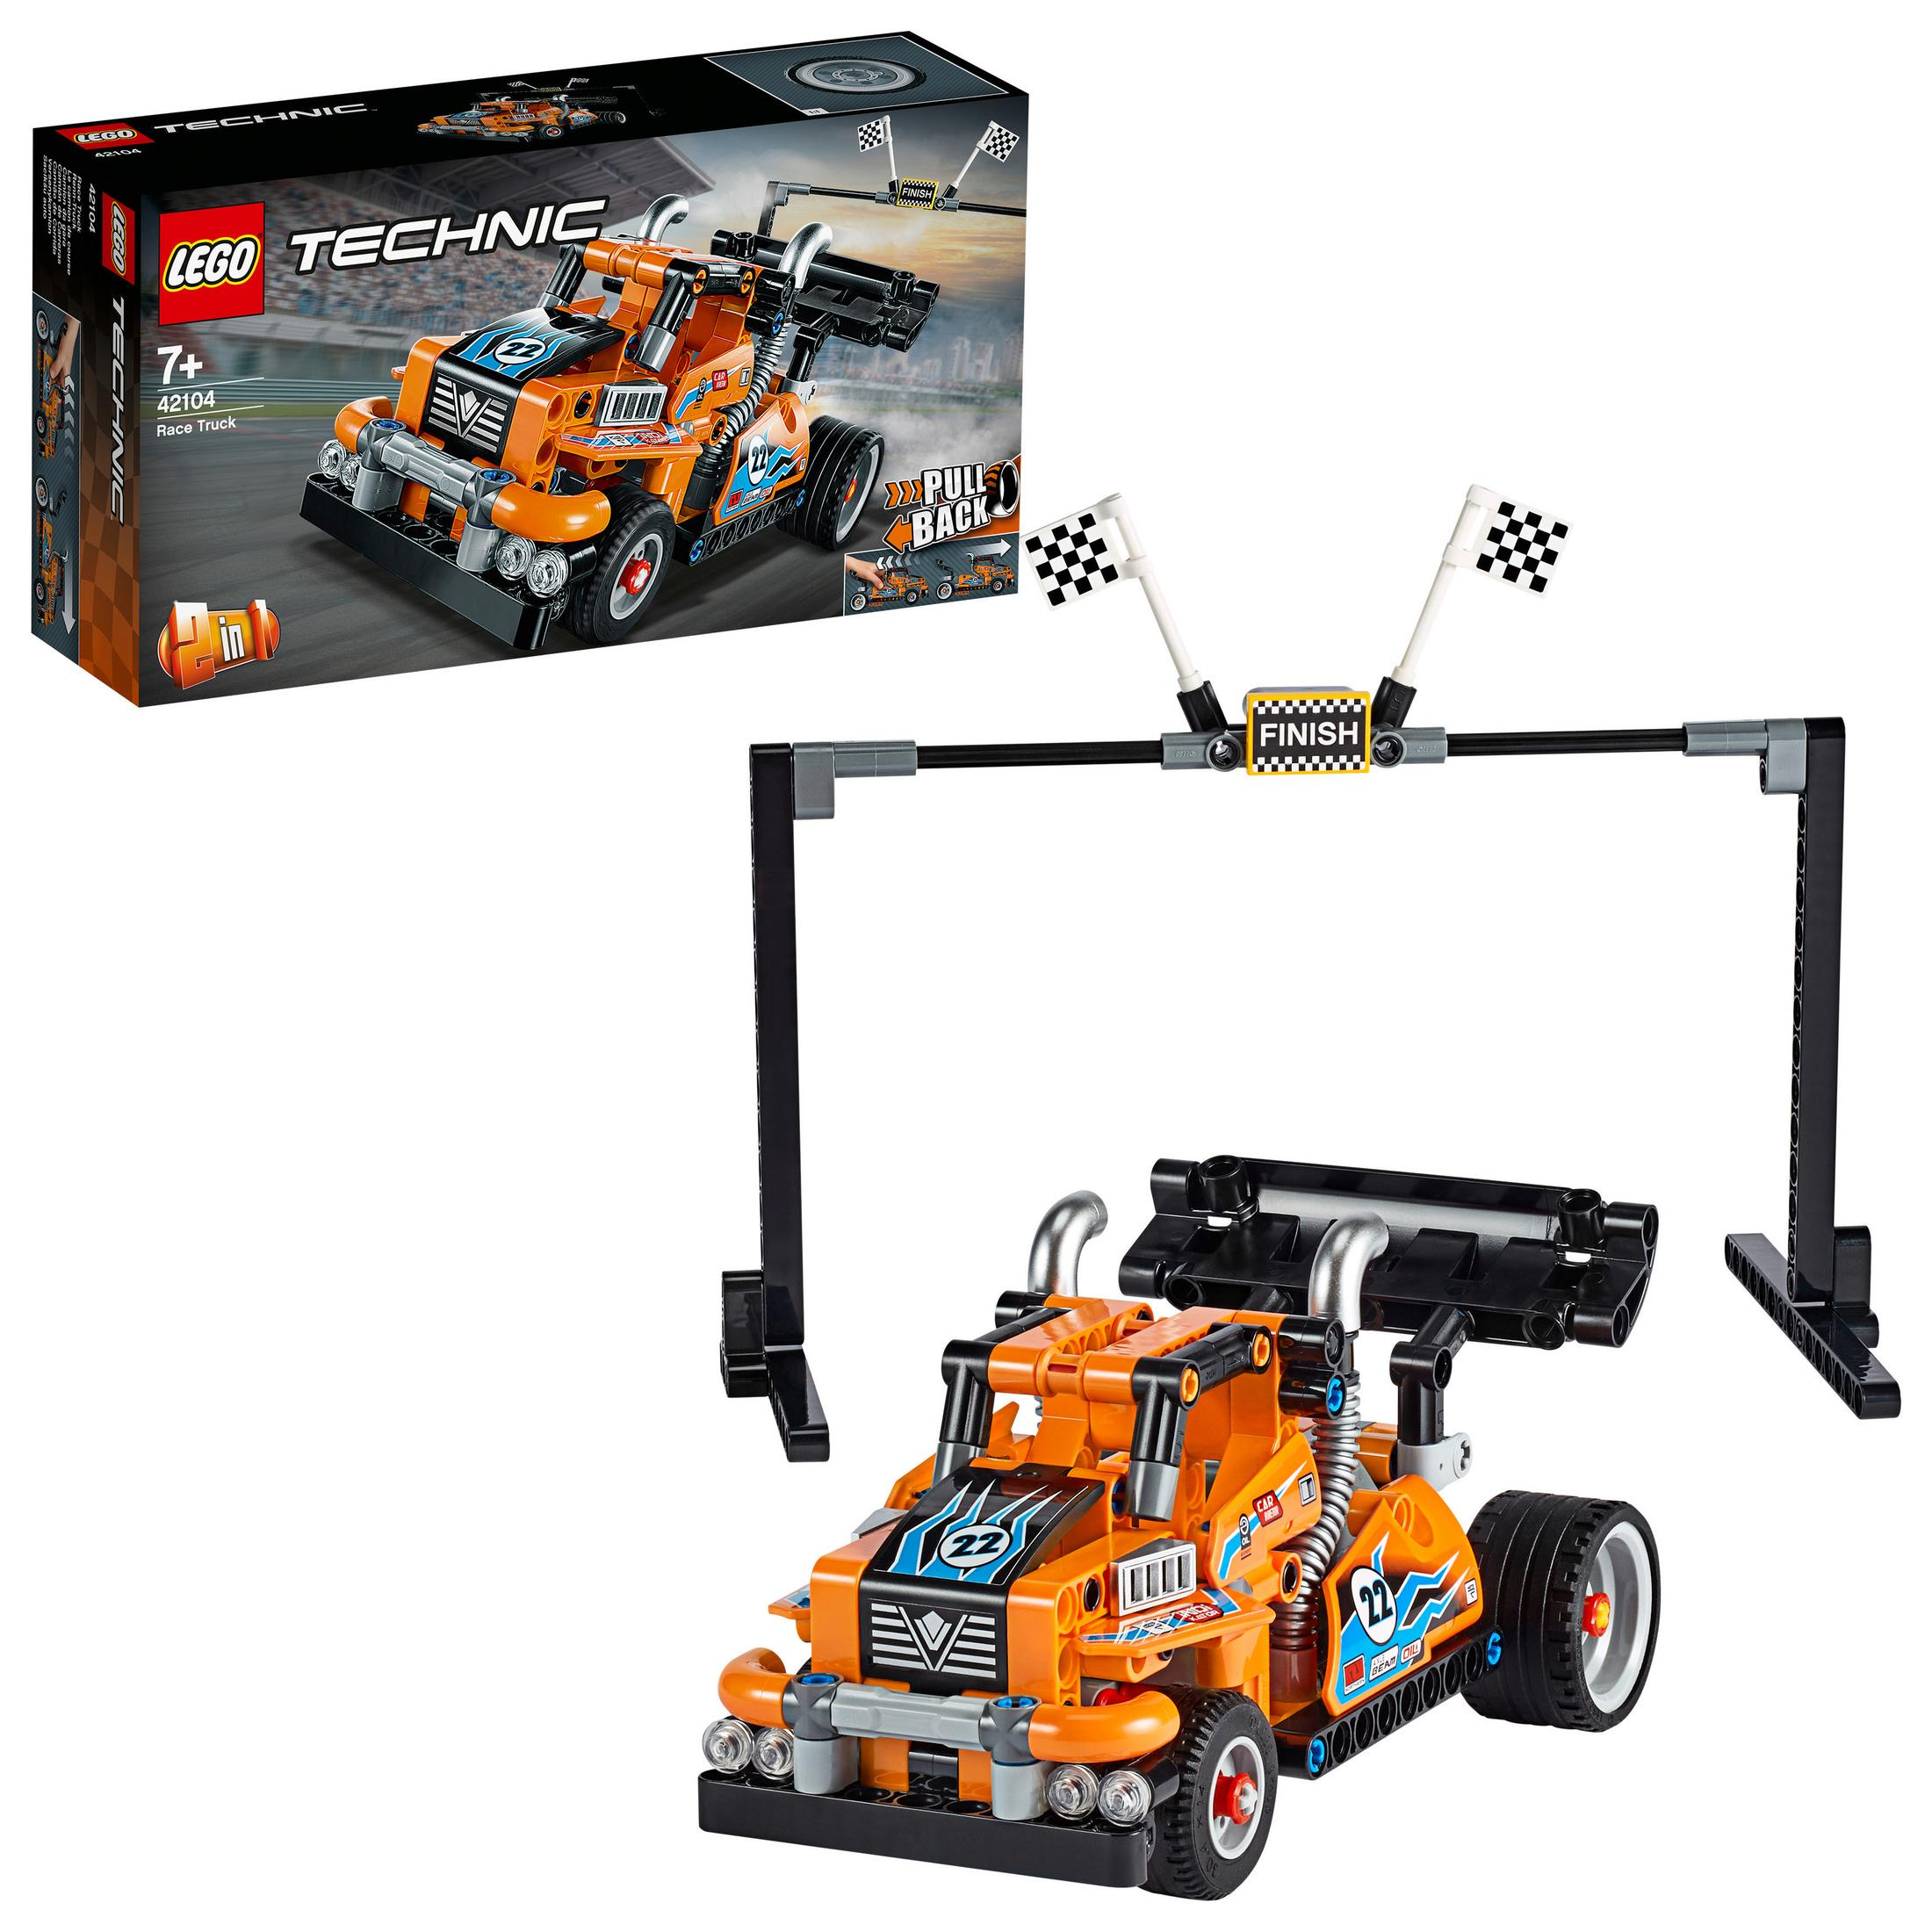 42104 RENN-TRUCK Bausatz, LEGO Mehrfarbig